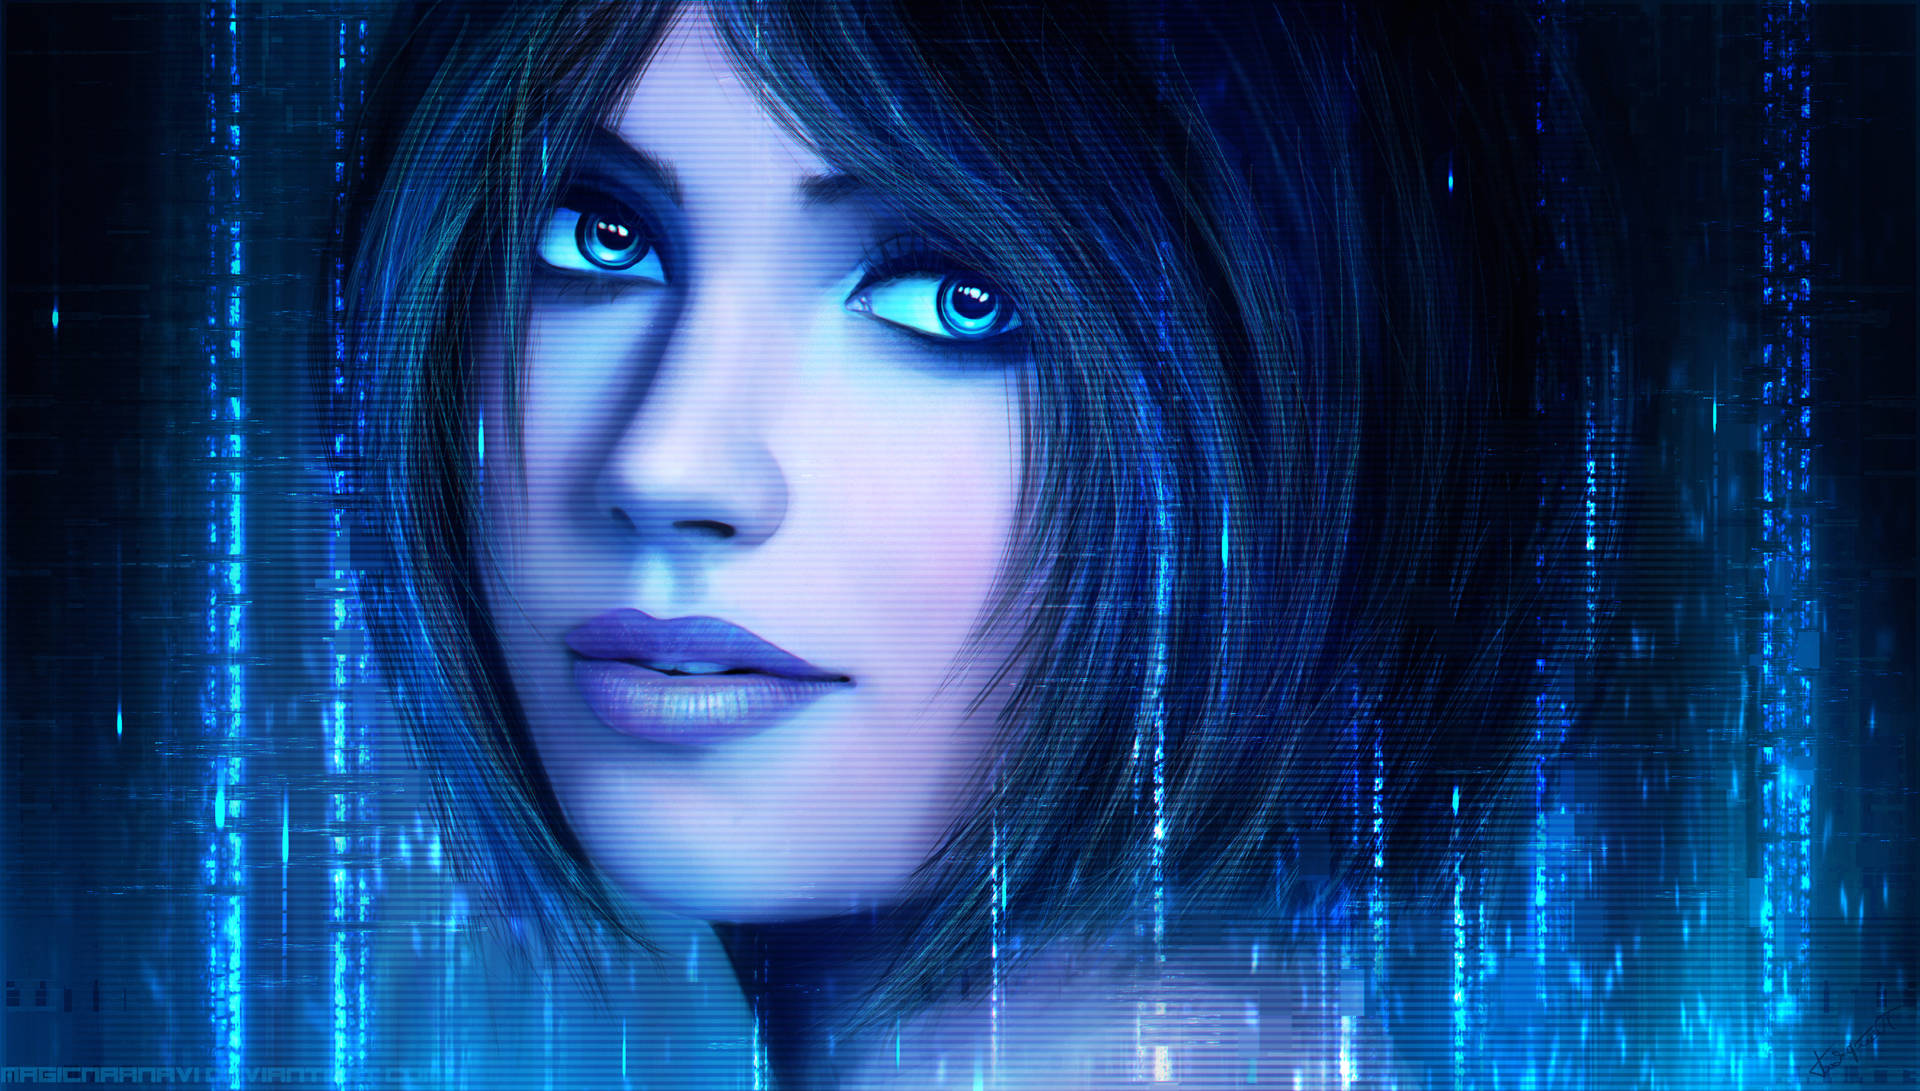 Halo 4 Cortana Artificial Intelligence